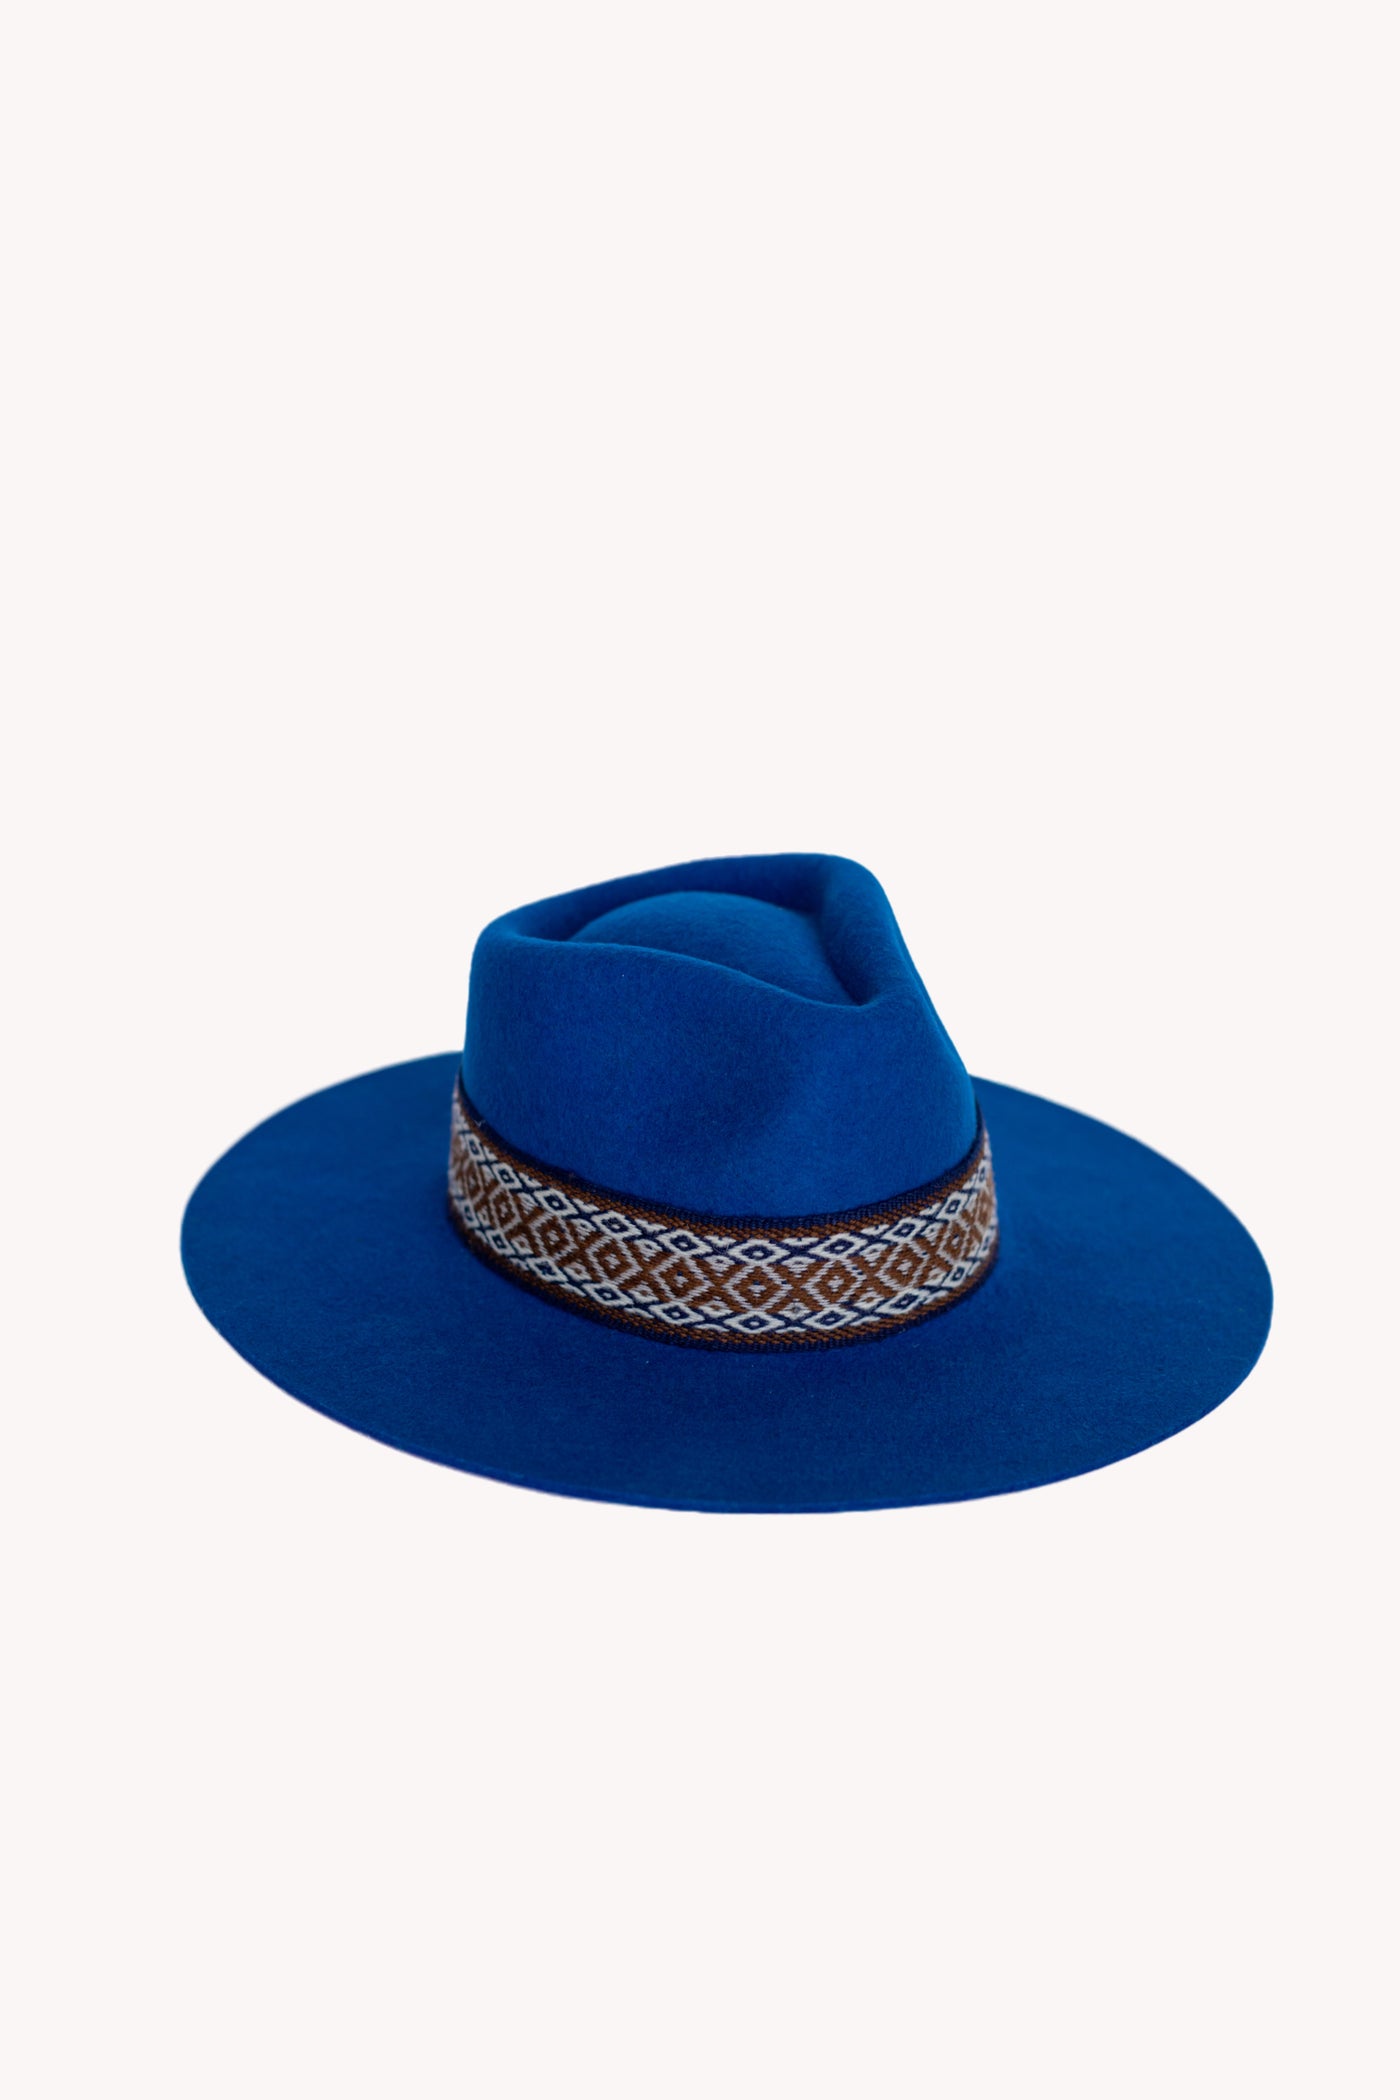 blue western style peruvian hat